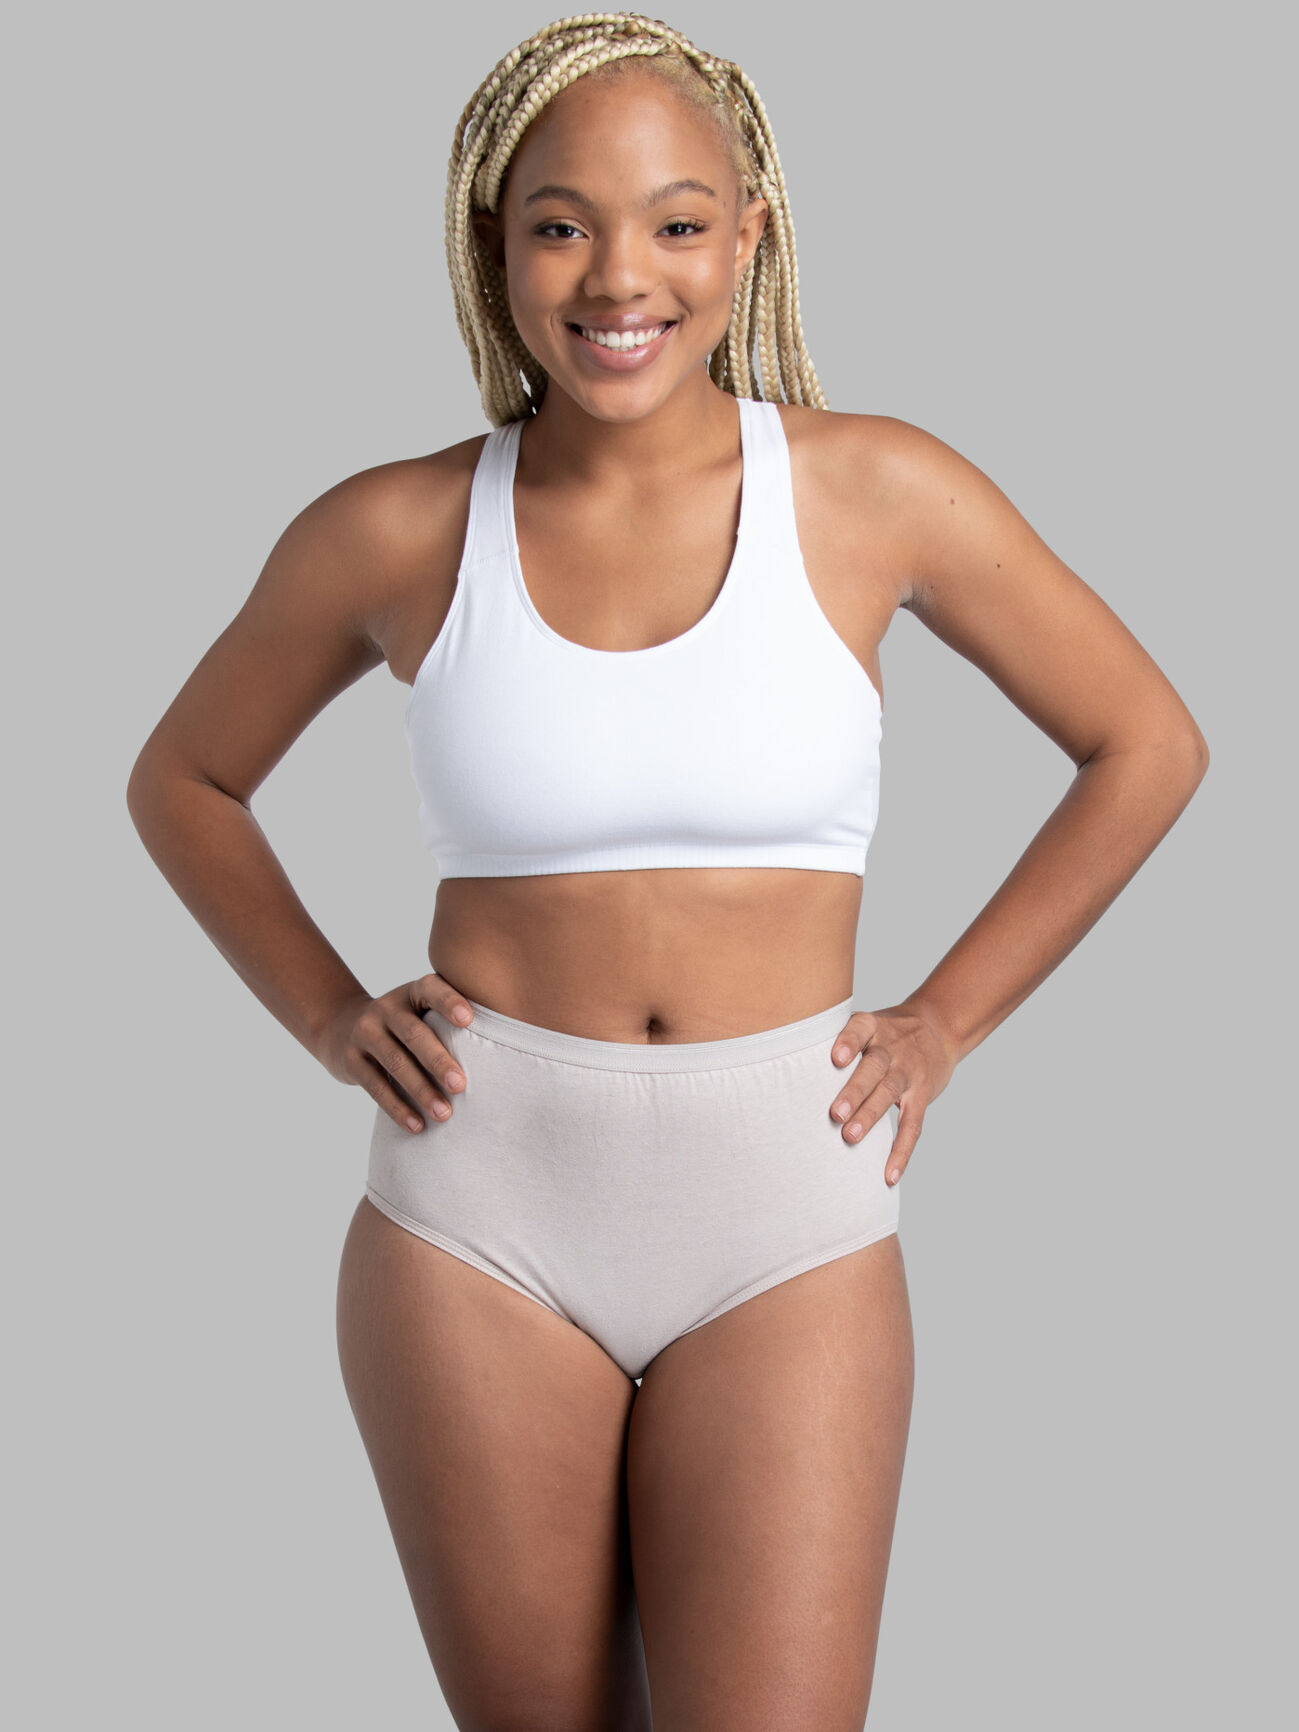 5 Pack Ladies Briefs Maxi, 100% Cotton Full Comfort Fit Underwear